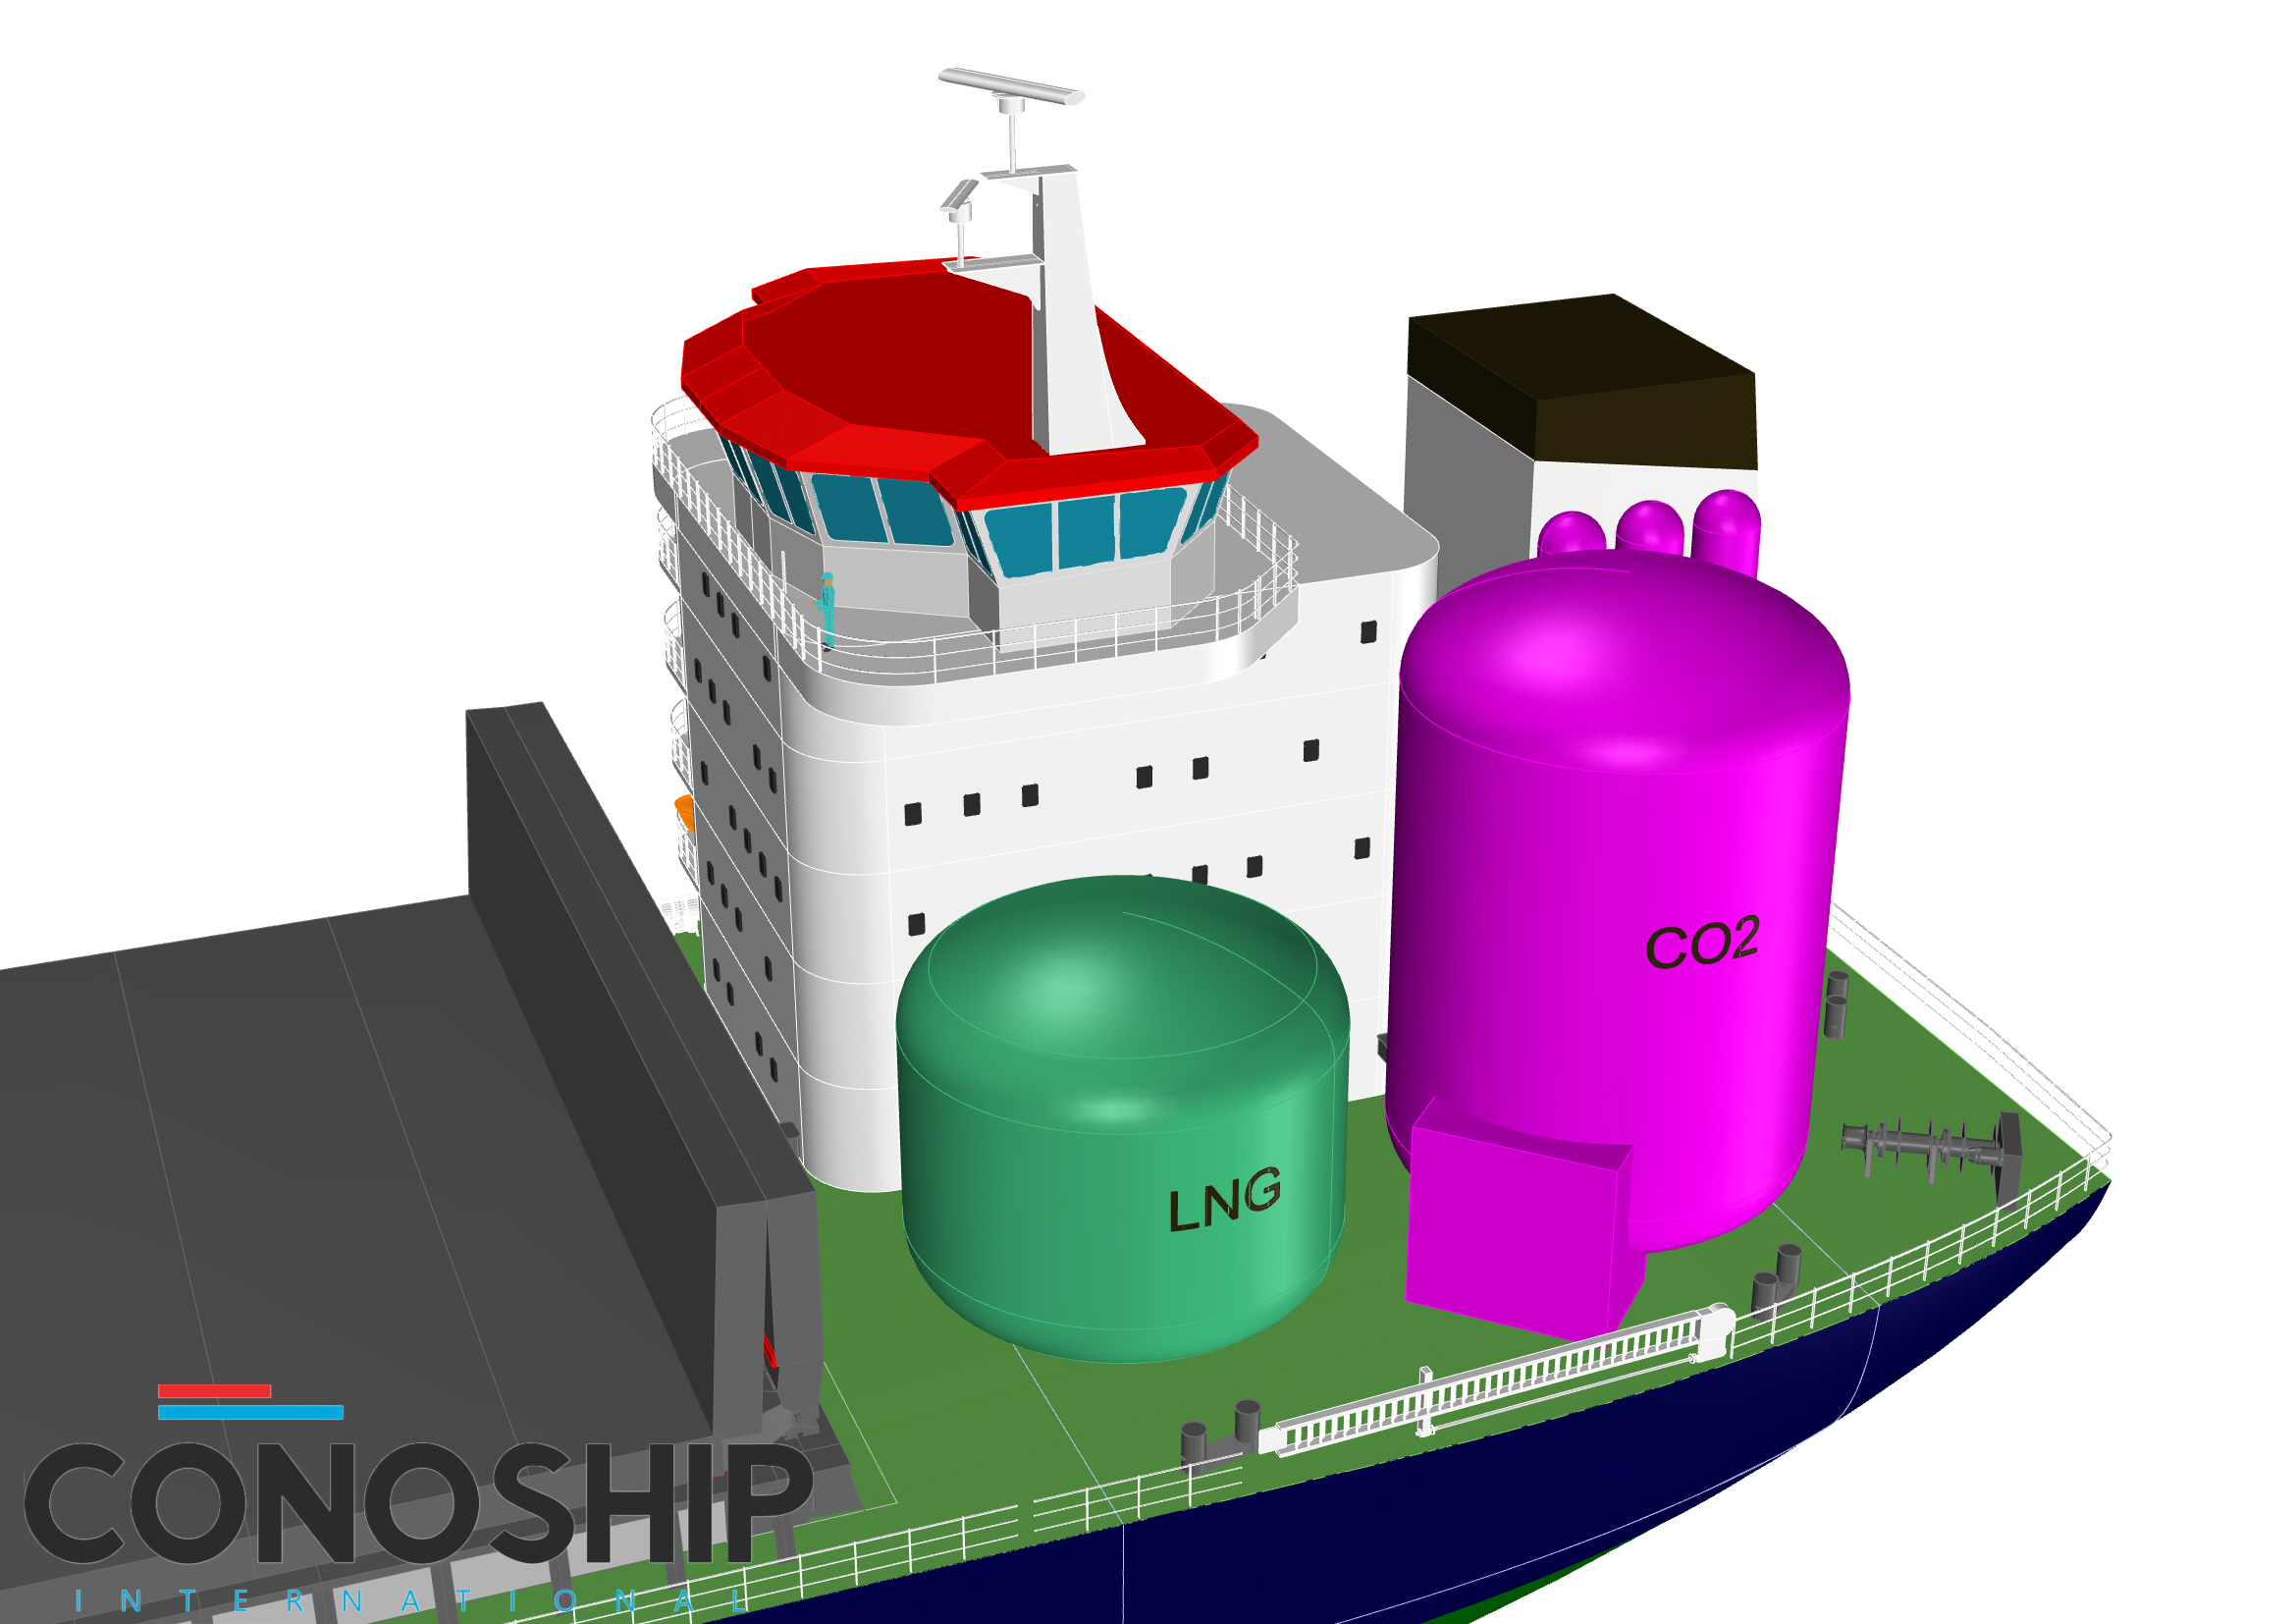 Conoship design of LNG + Co2 capture